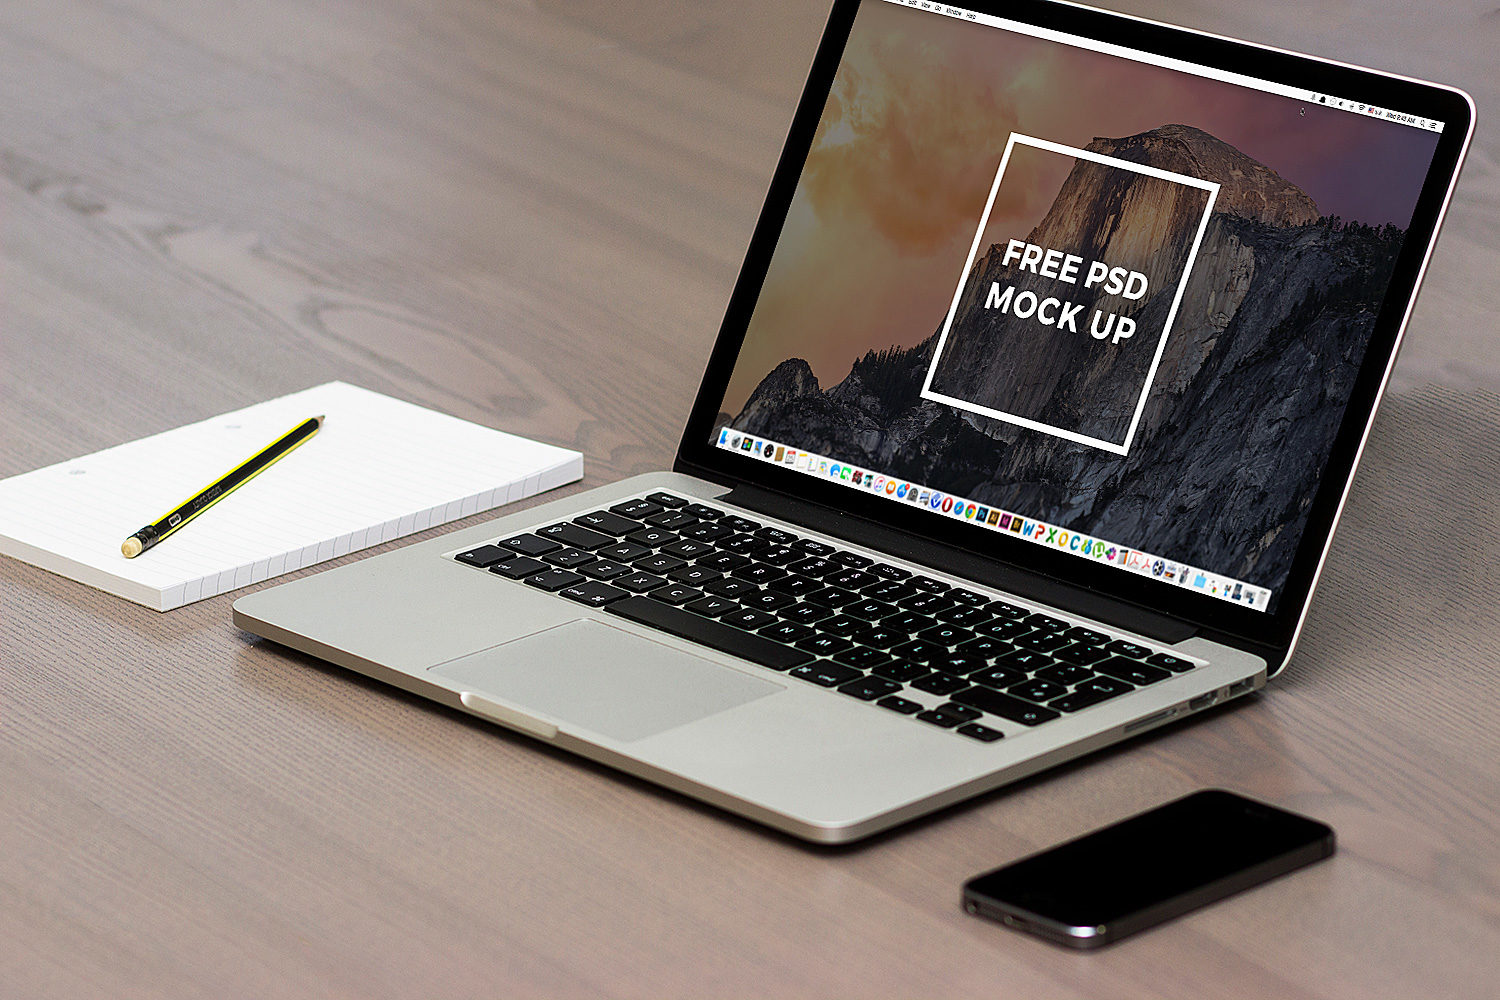 MacBook Pro Free Mockup (2 PSD files) Mockup World HQ